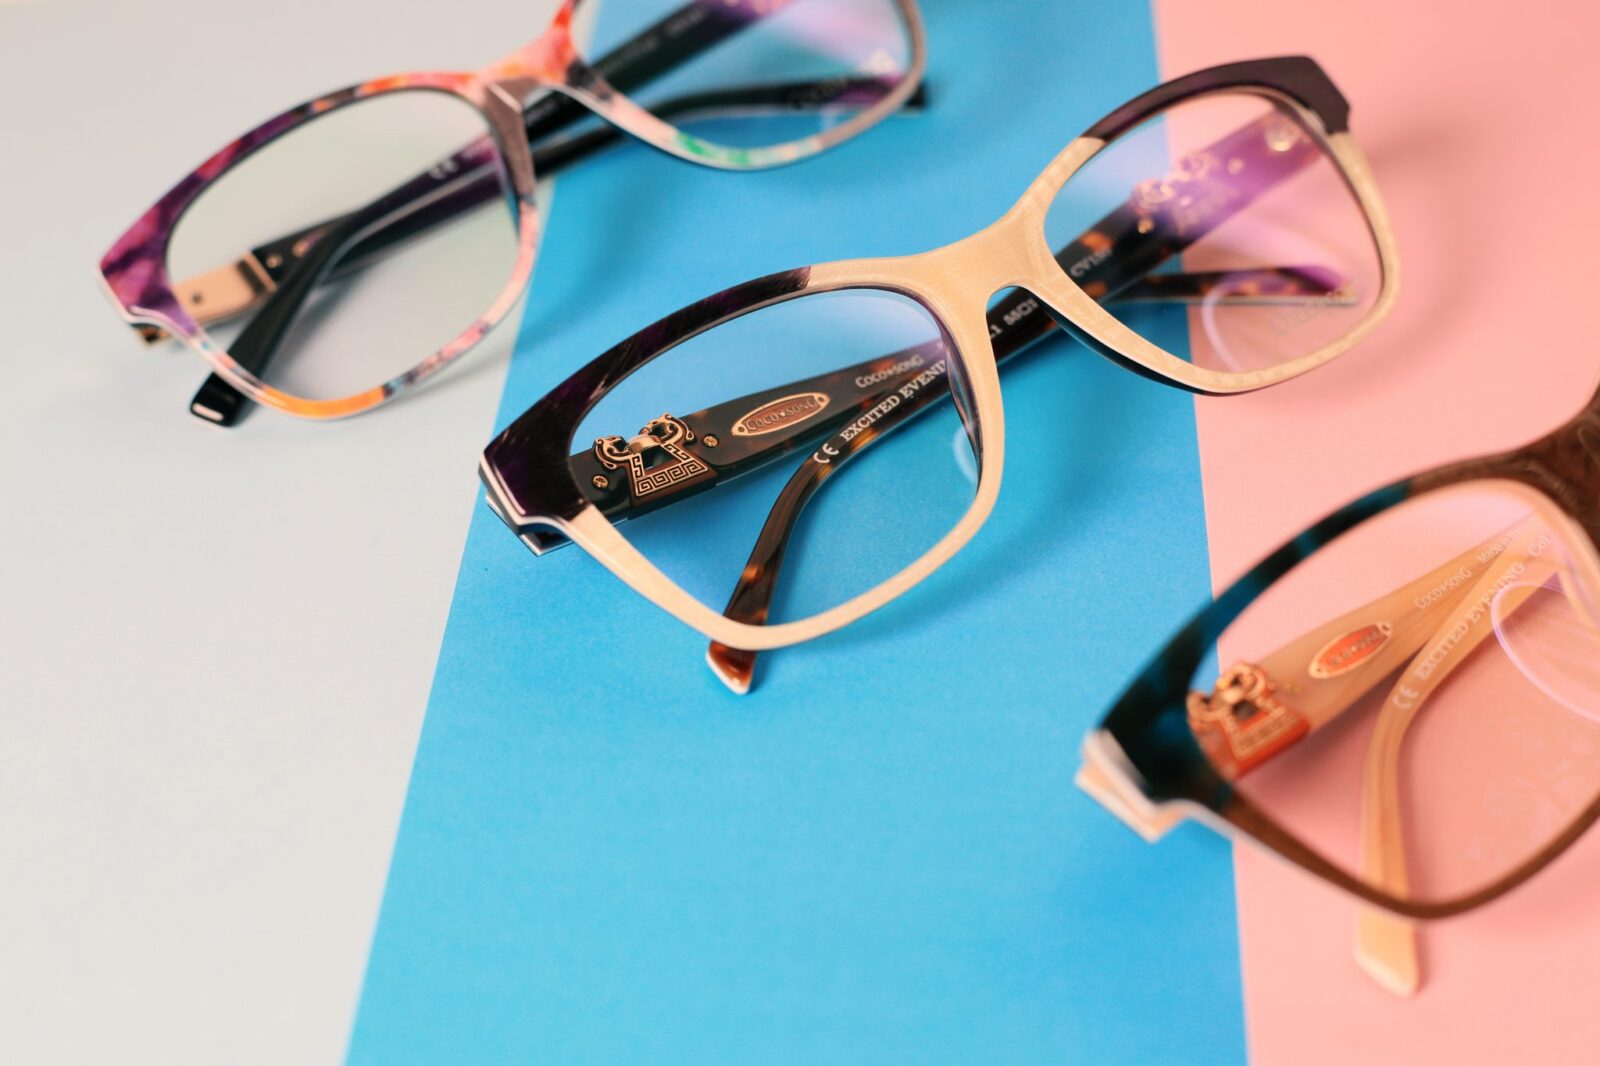 Coco Song Eyewear Glasses Eyeglasses Brand